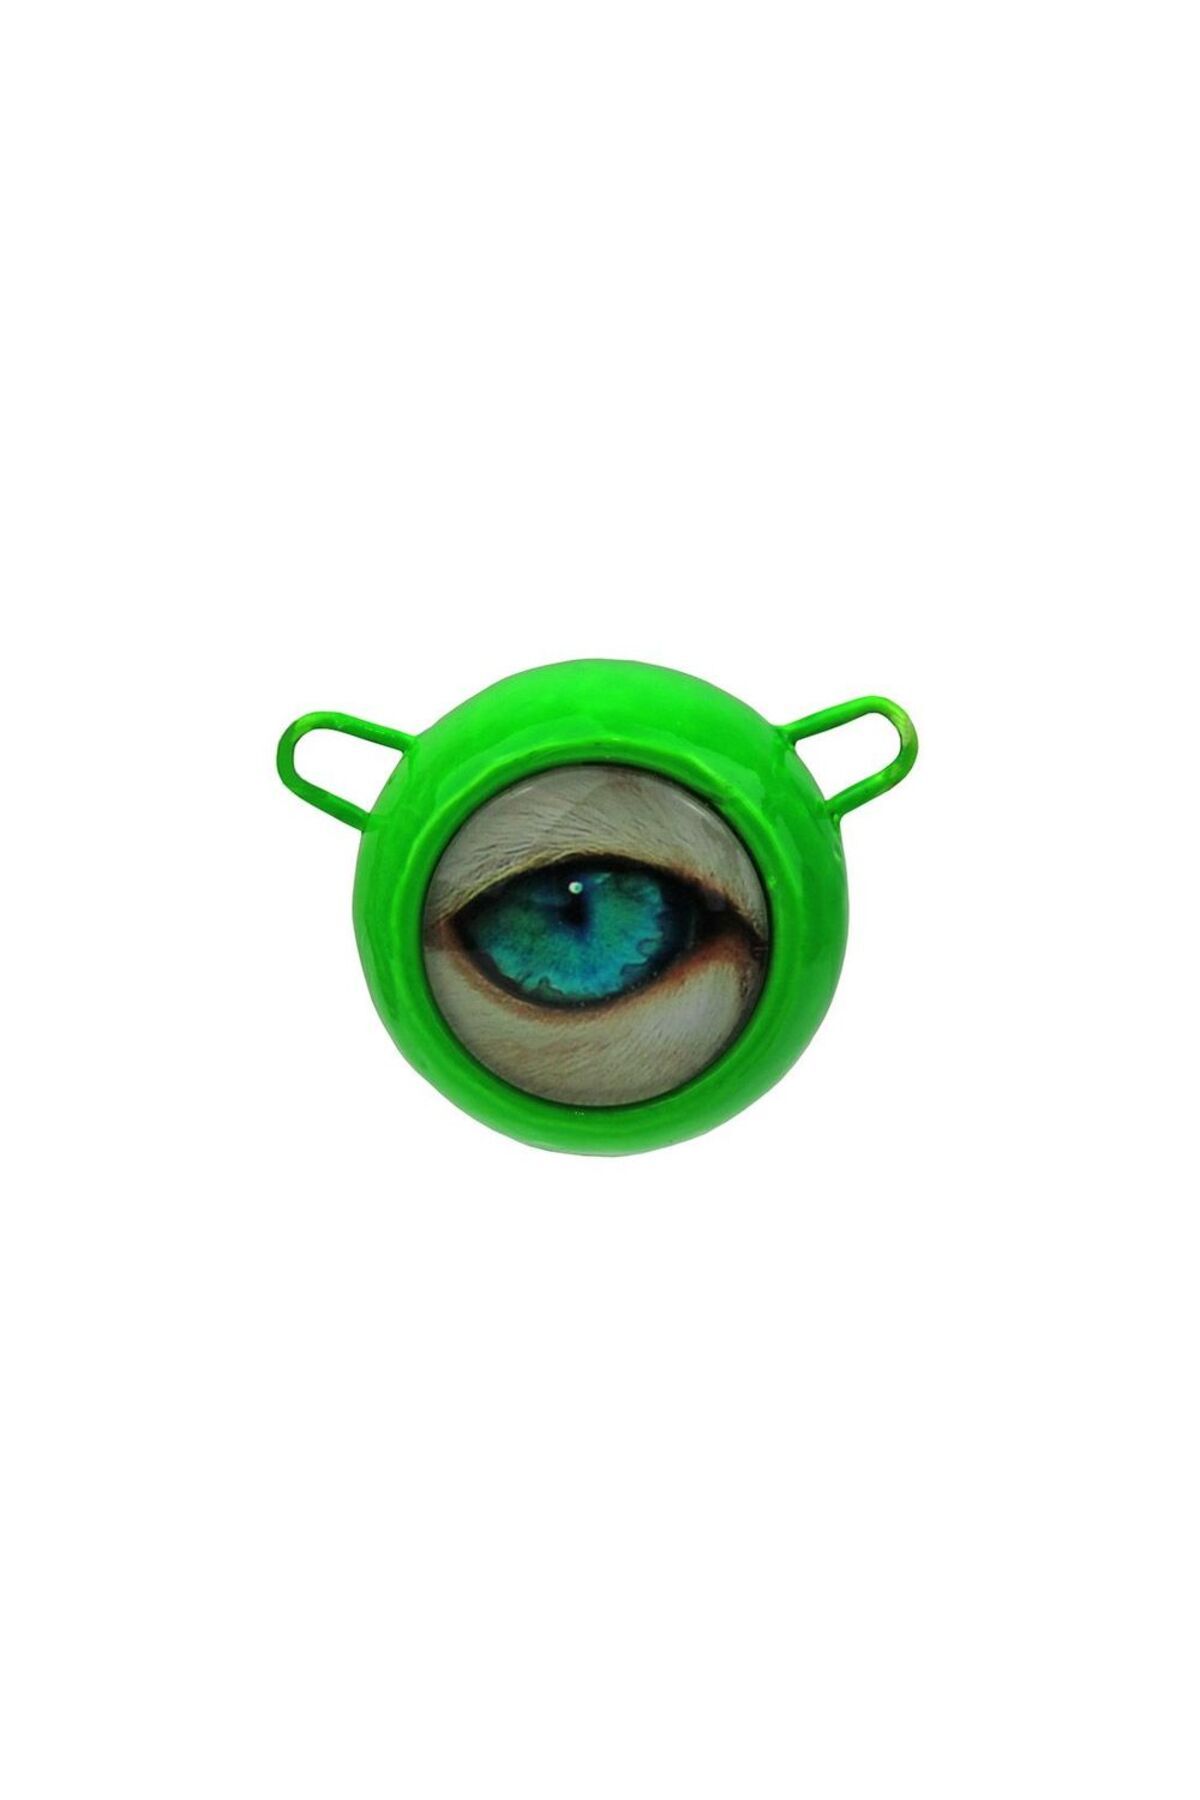 Anchor Melek Göz Yeşil 500 gr